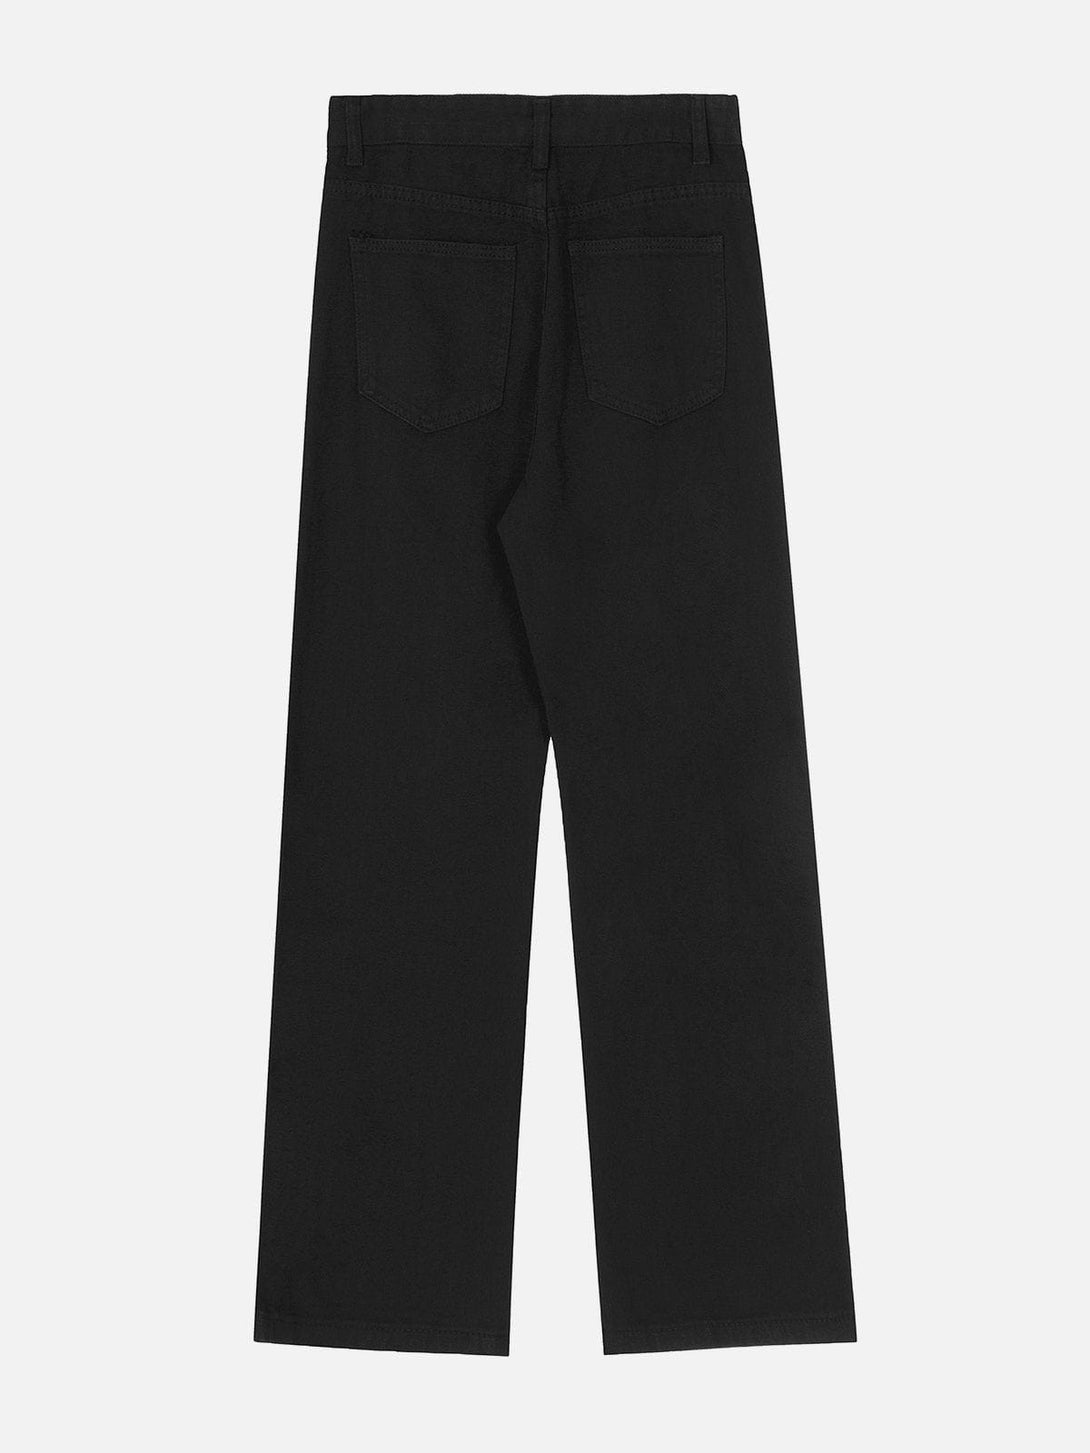 Levefly - Lace Up Raw Pocket Pants - Streetwear Fashion - levefly.com